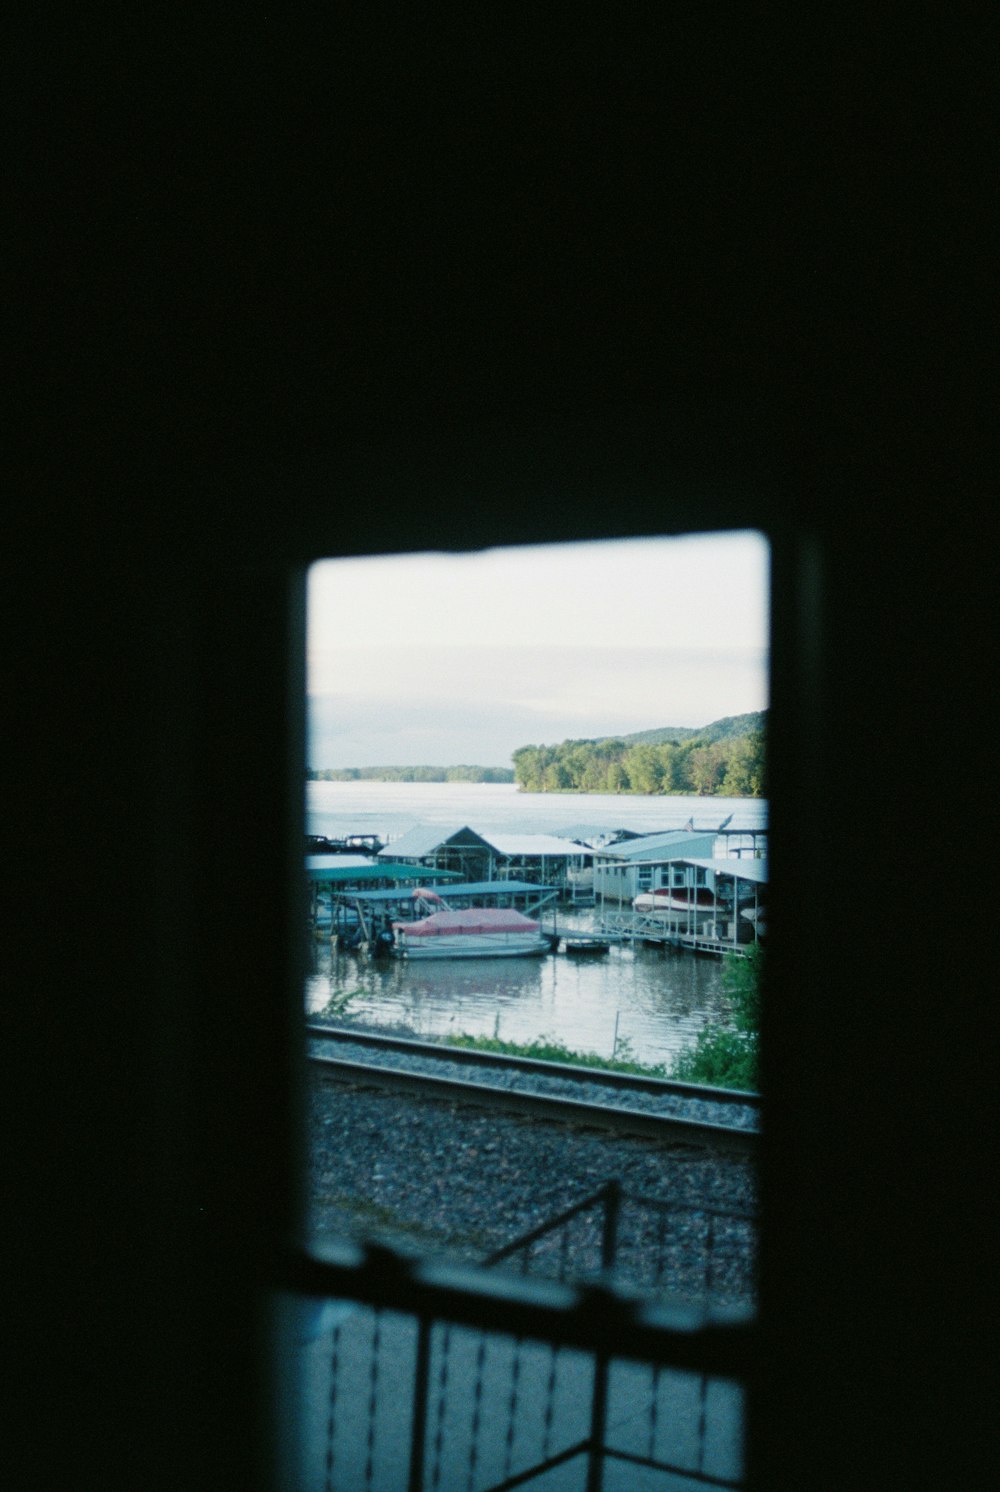 una vista di un lago e una barca da una finestra